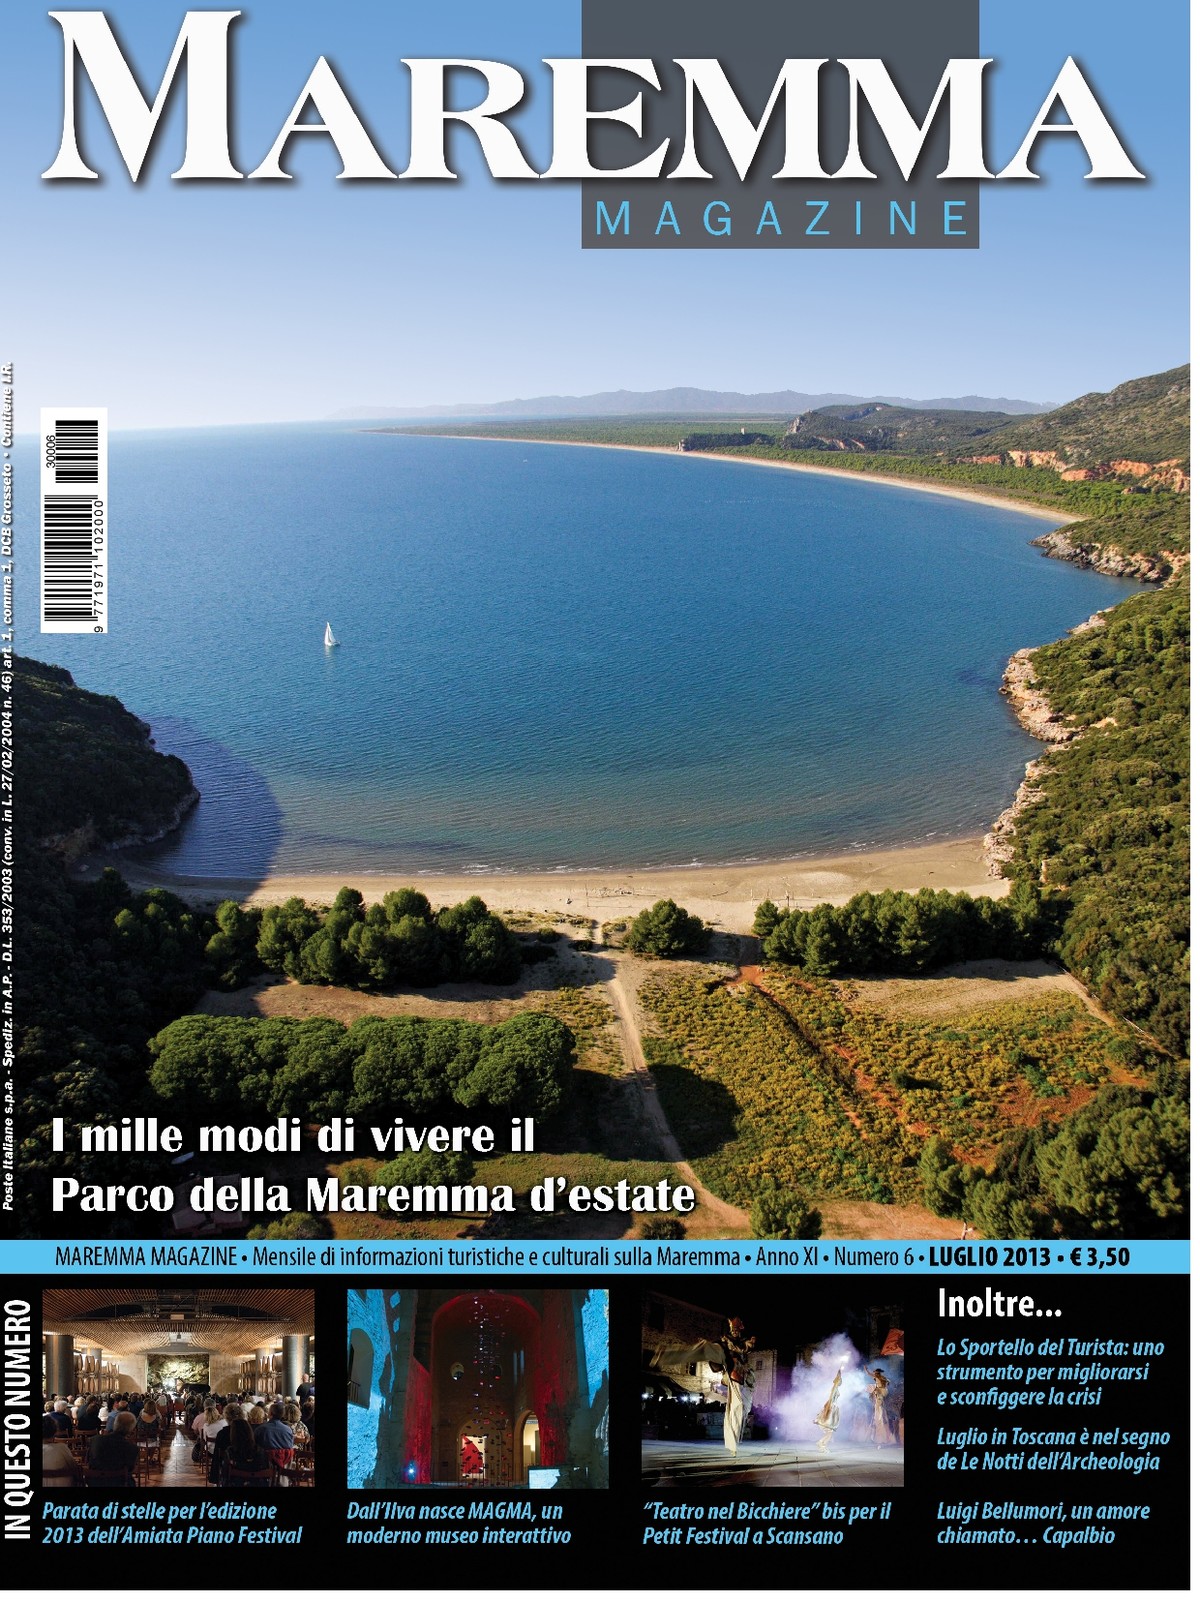 Maremma Magazine - OTTOBRE 2012 - Numero 9 Immagine